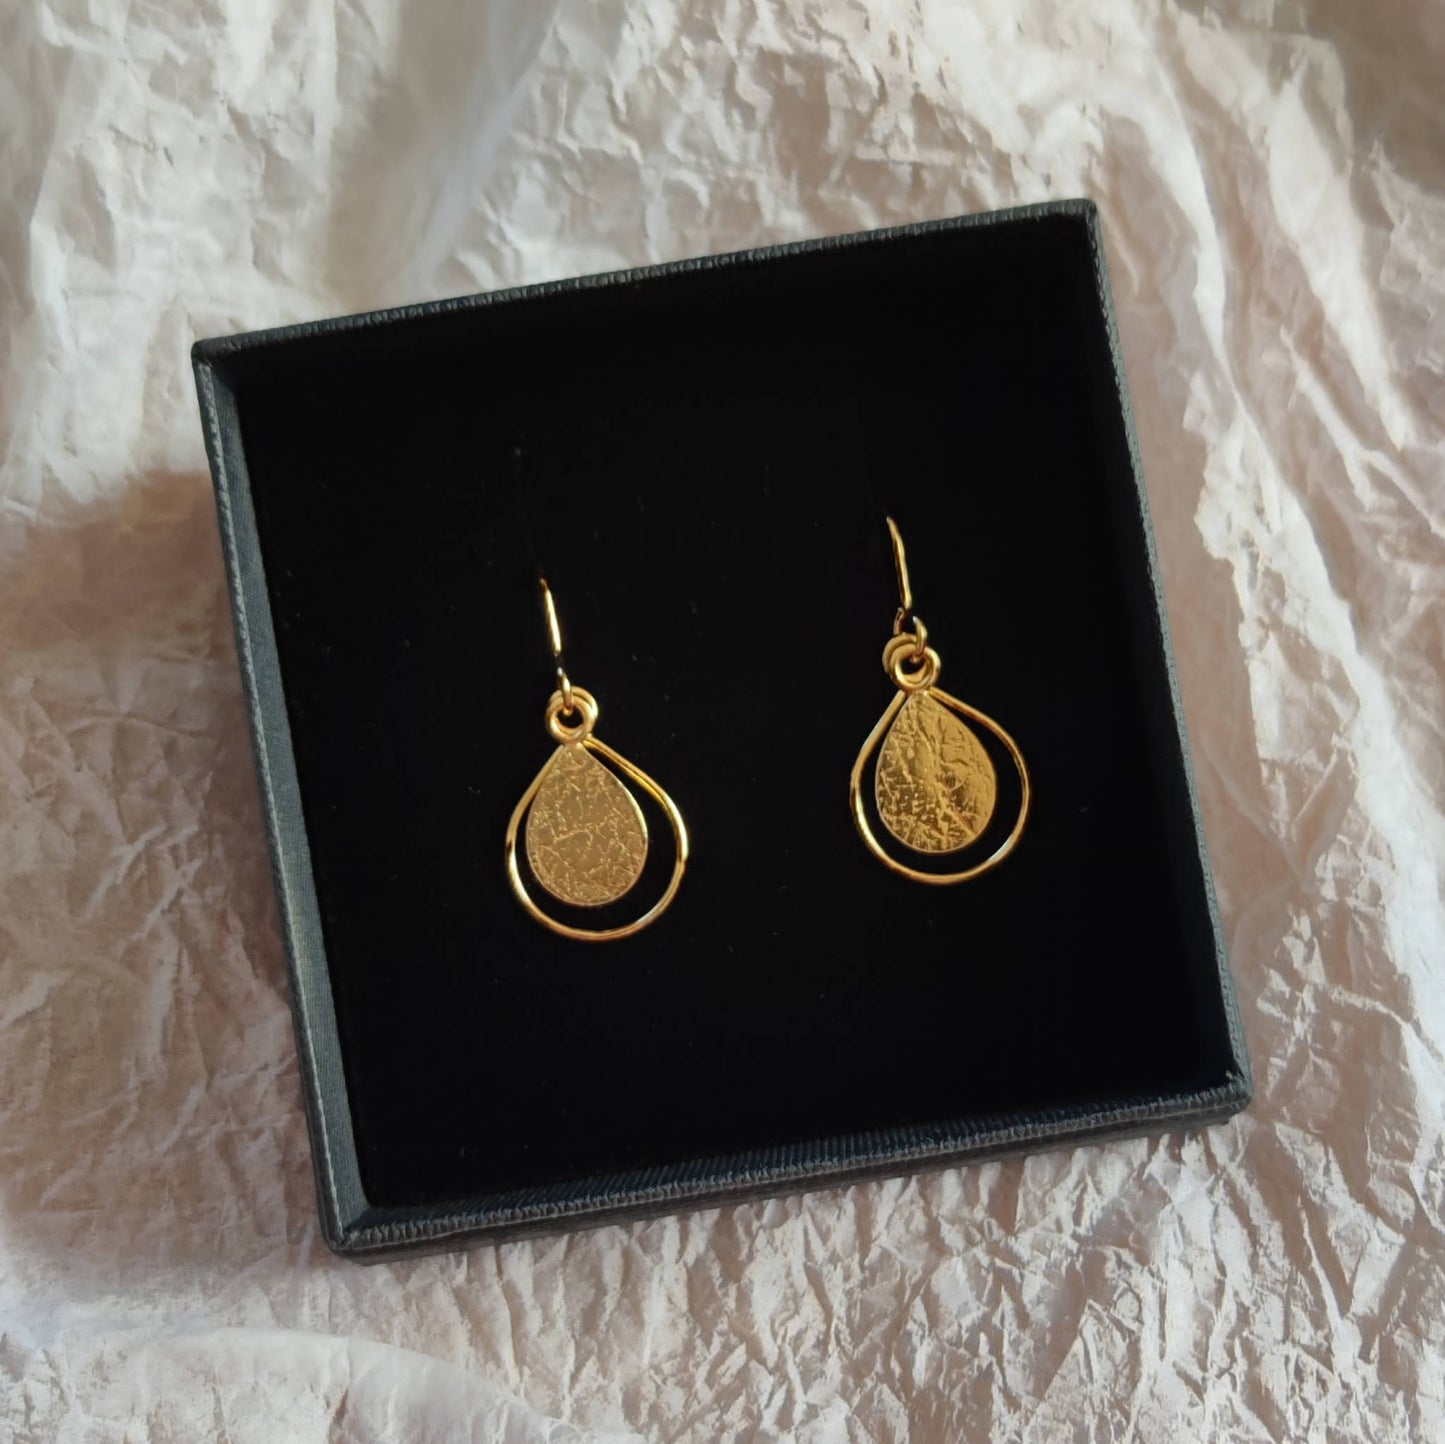 handmade gold textured dewdrop earrings in black gift box